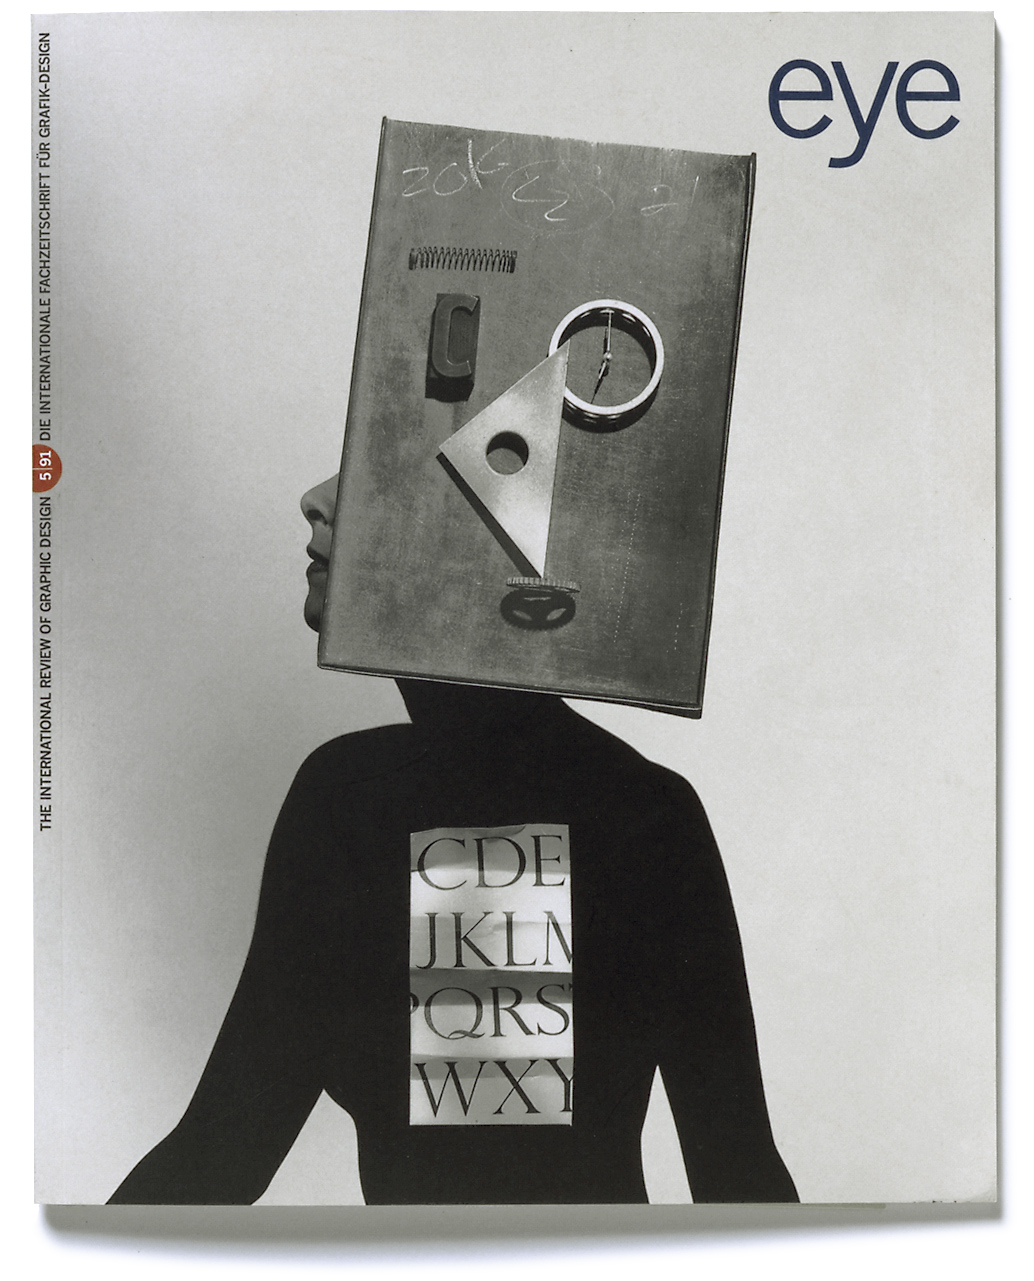 'Eye Magazine Cover' 1991, ©geof kern